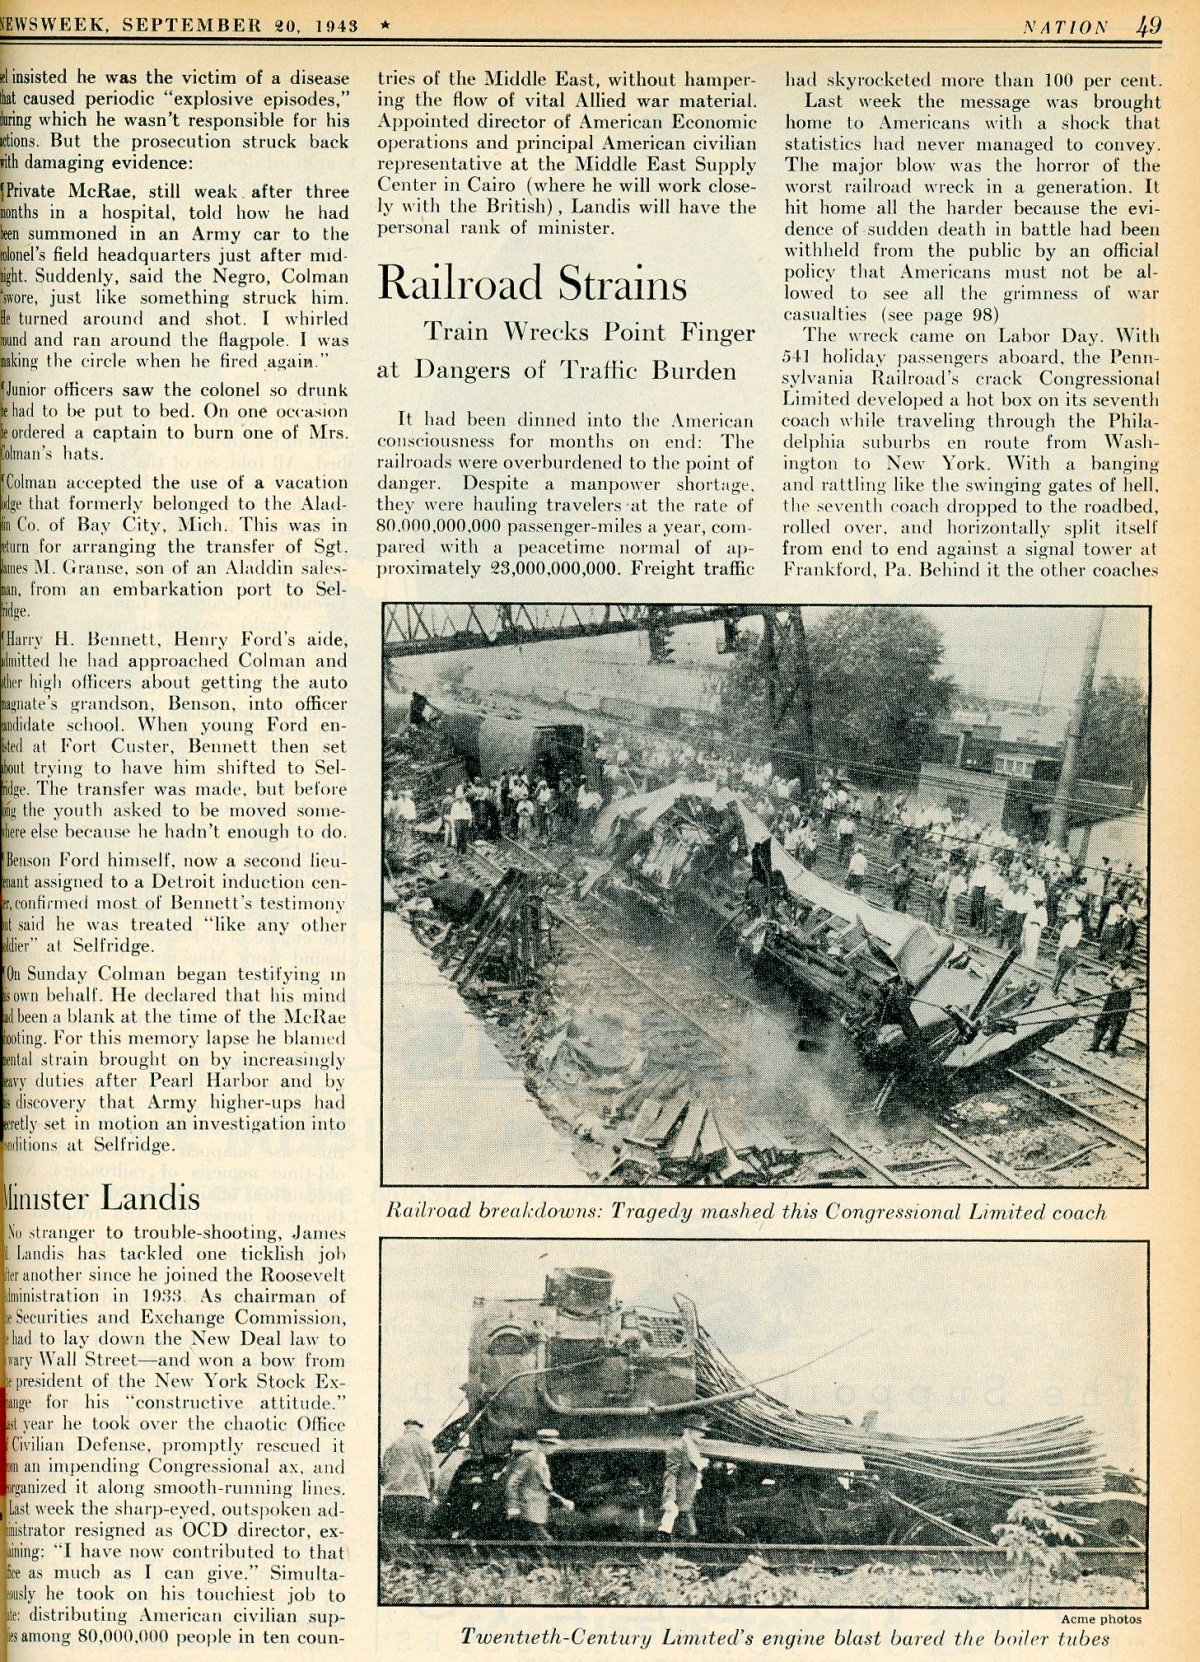 1943 train crash